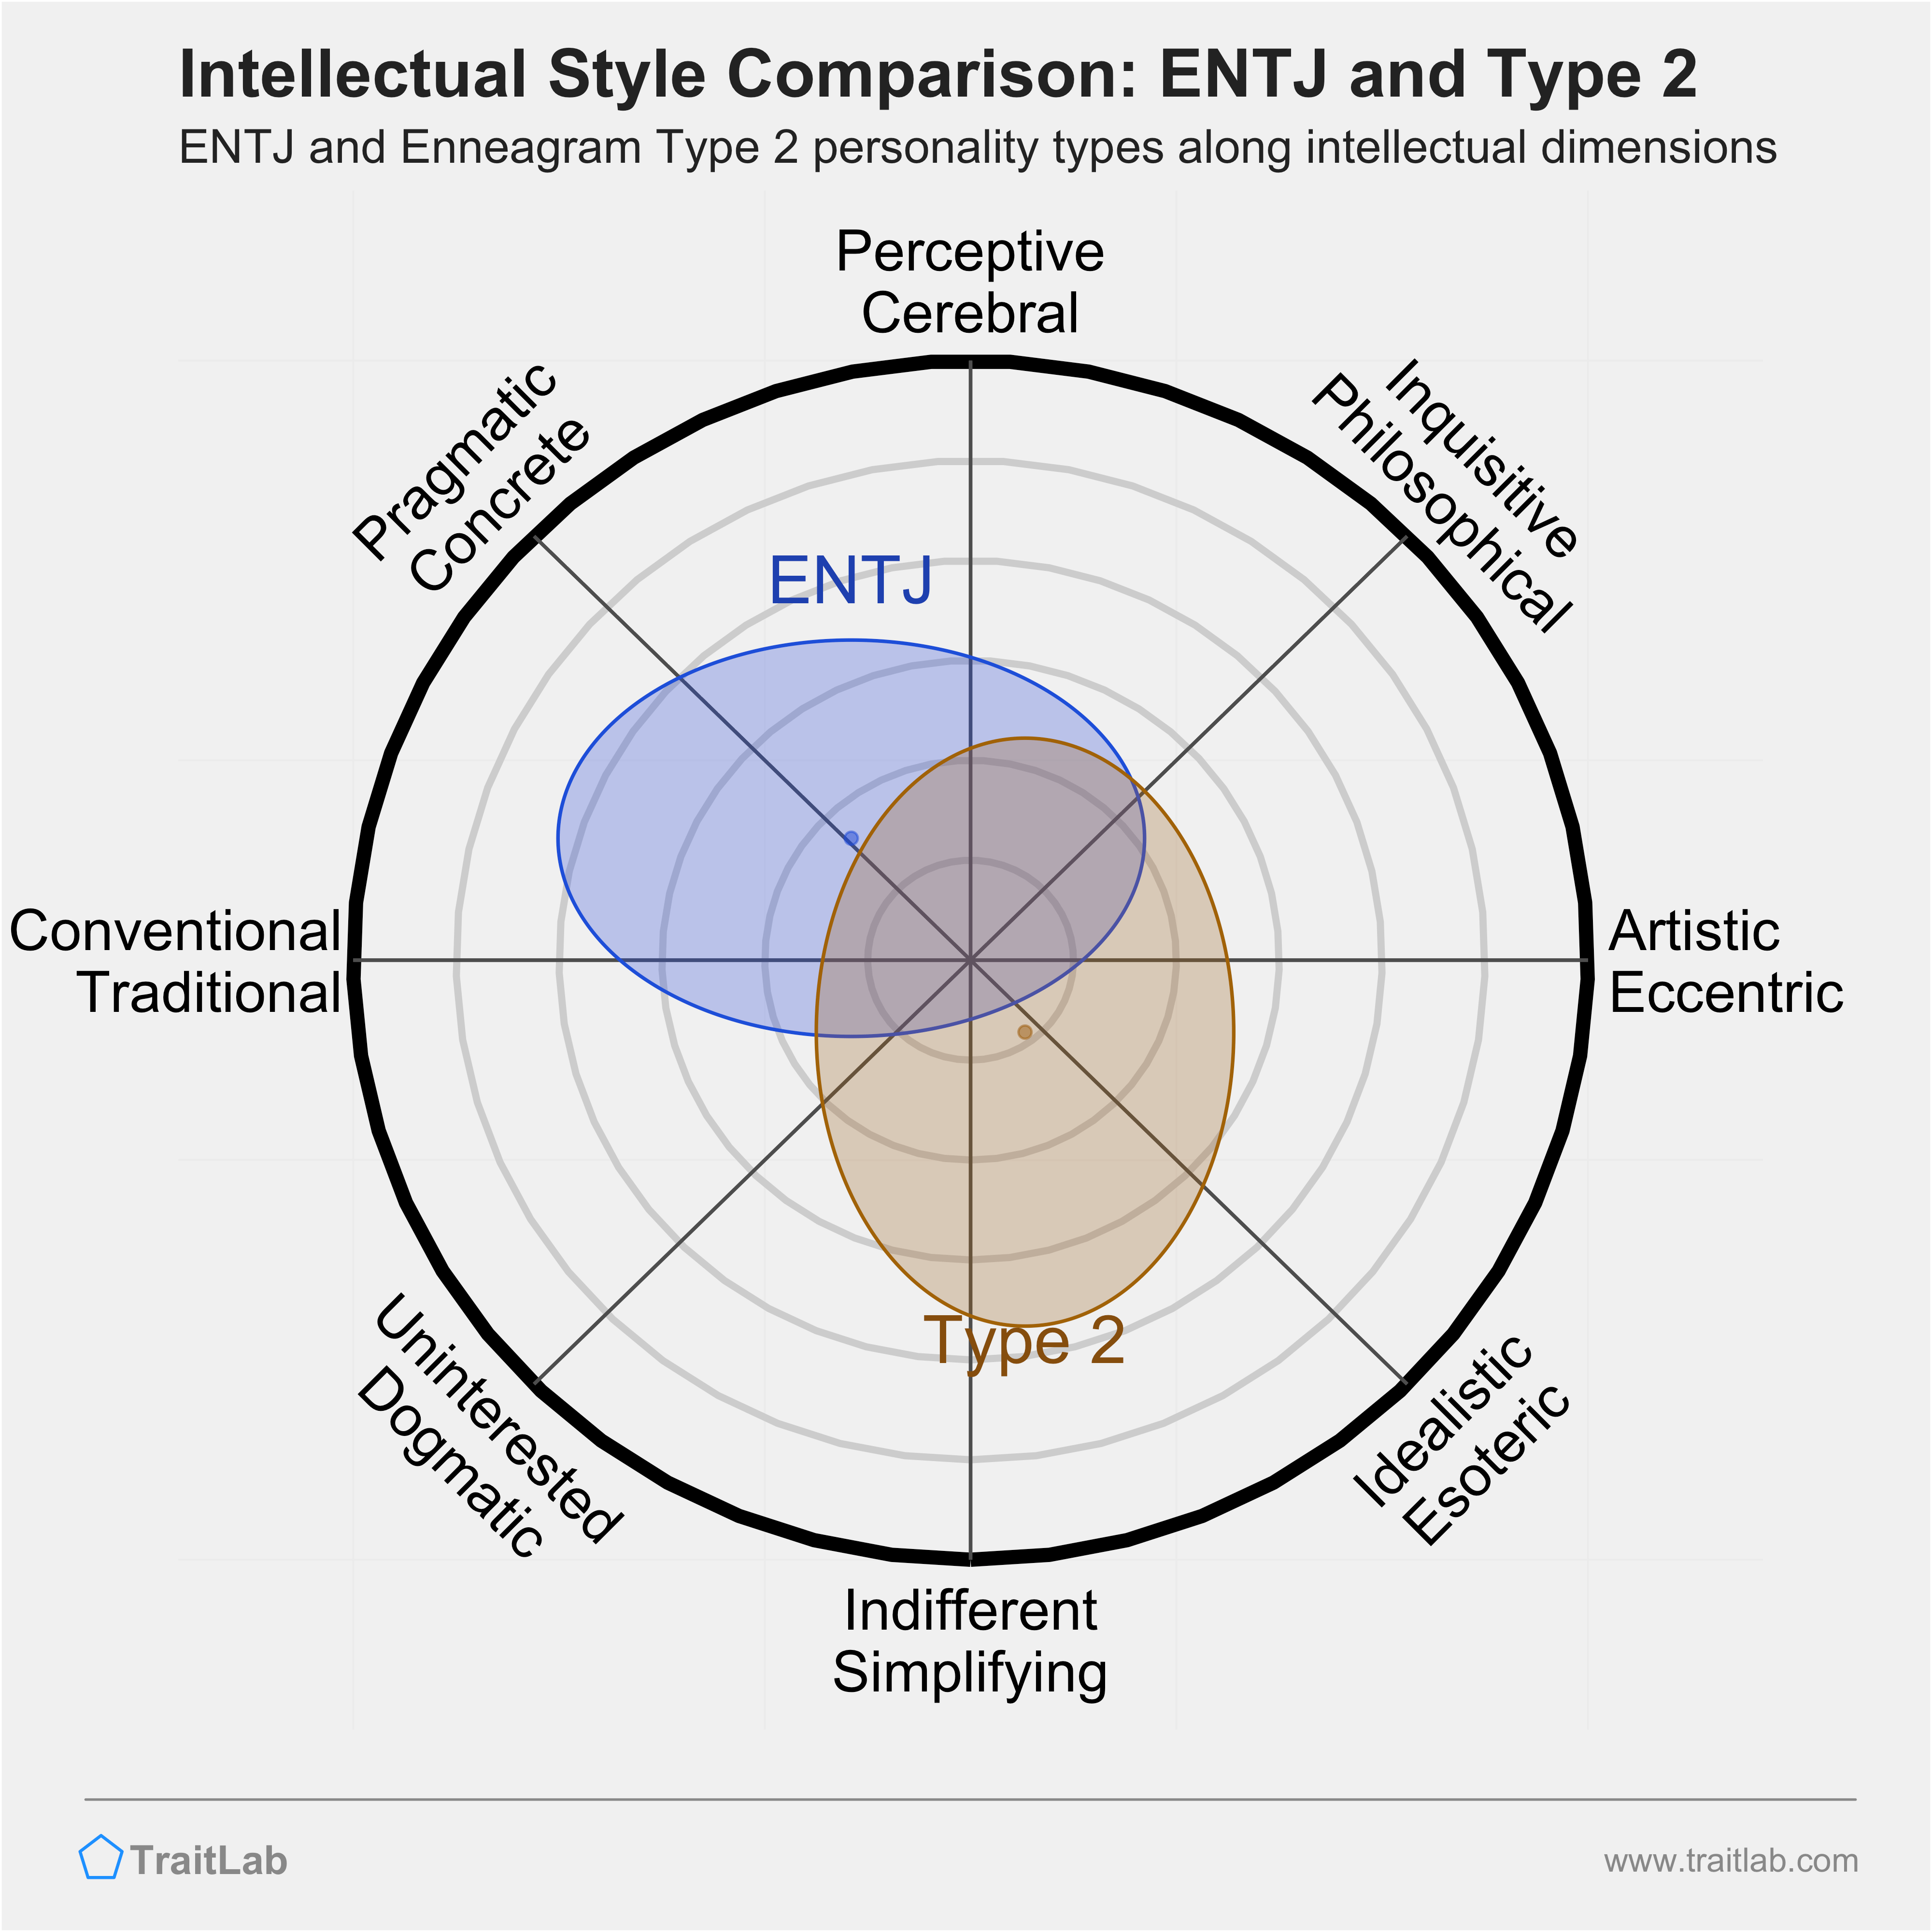 ENTJ and Type 2 comparison across intellectual dimensions